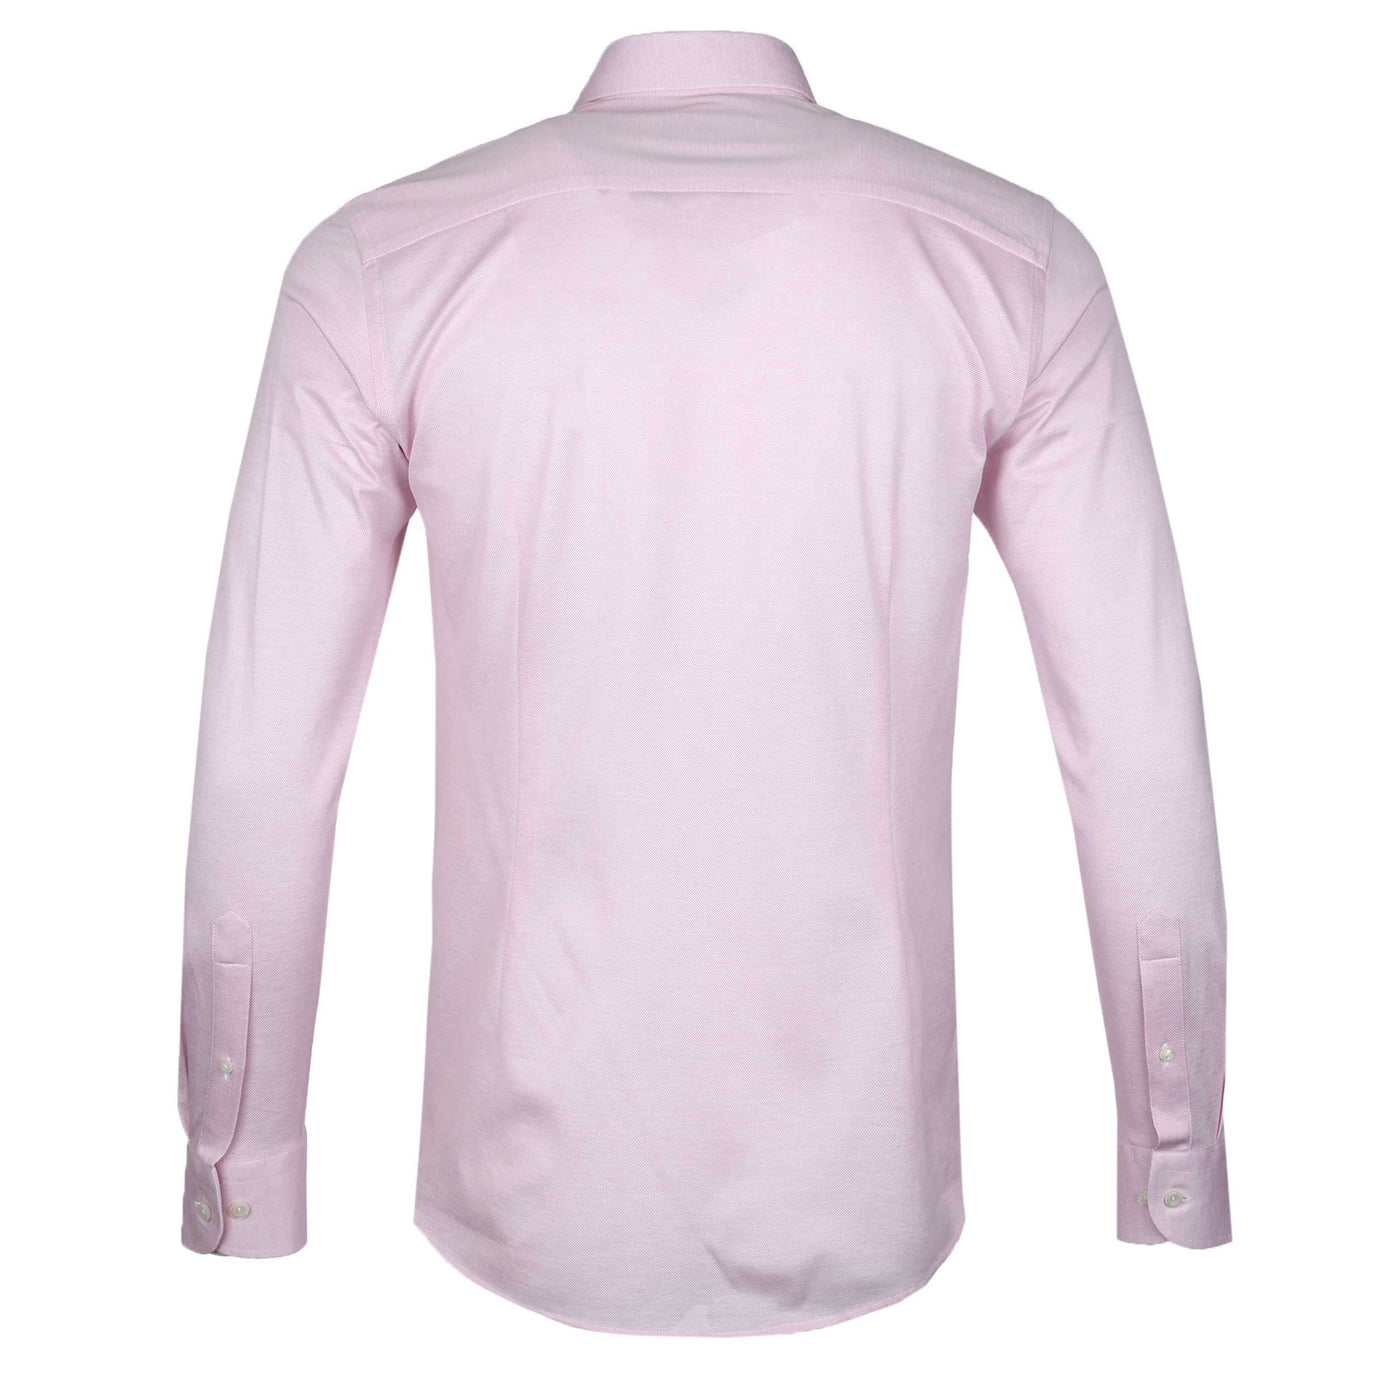 Eton Filo Di Scozia Oxford Pique Shirt in Pink Back